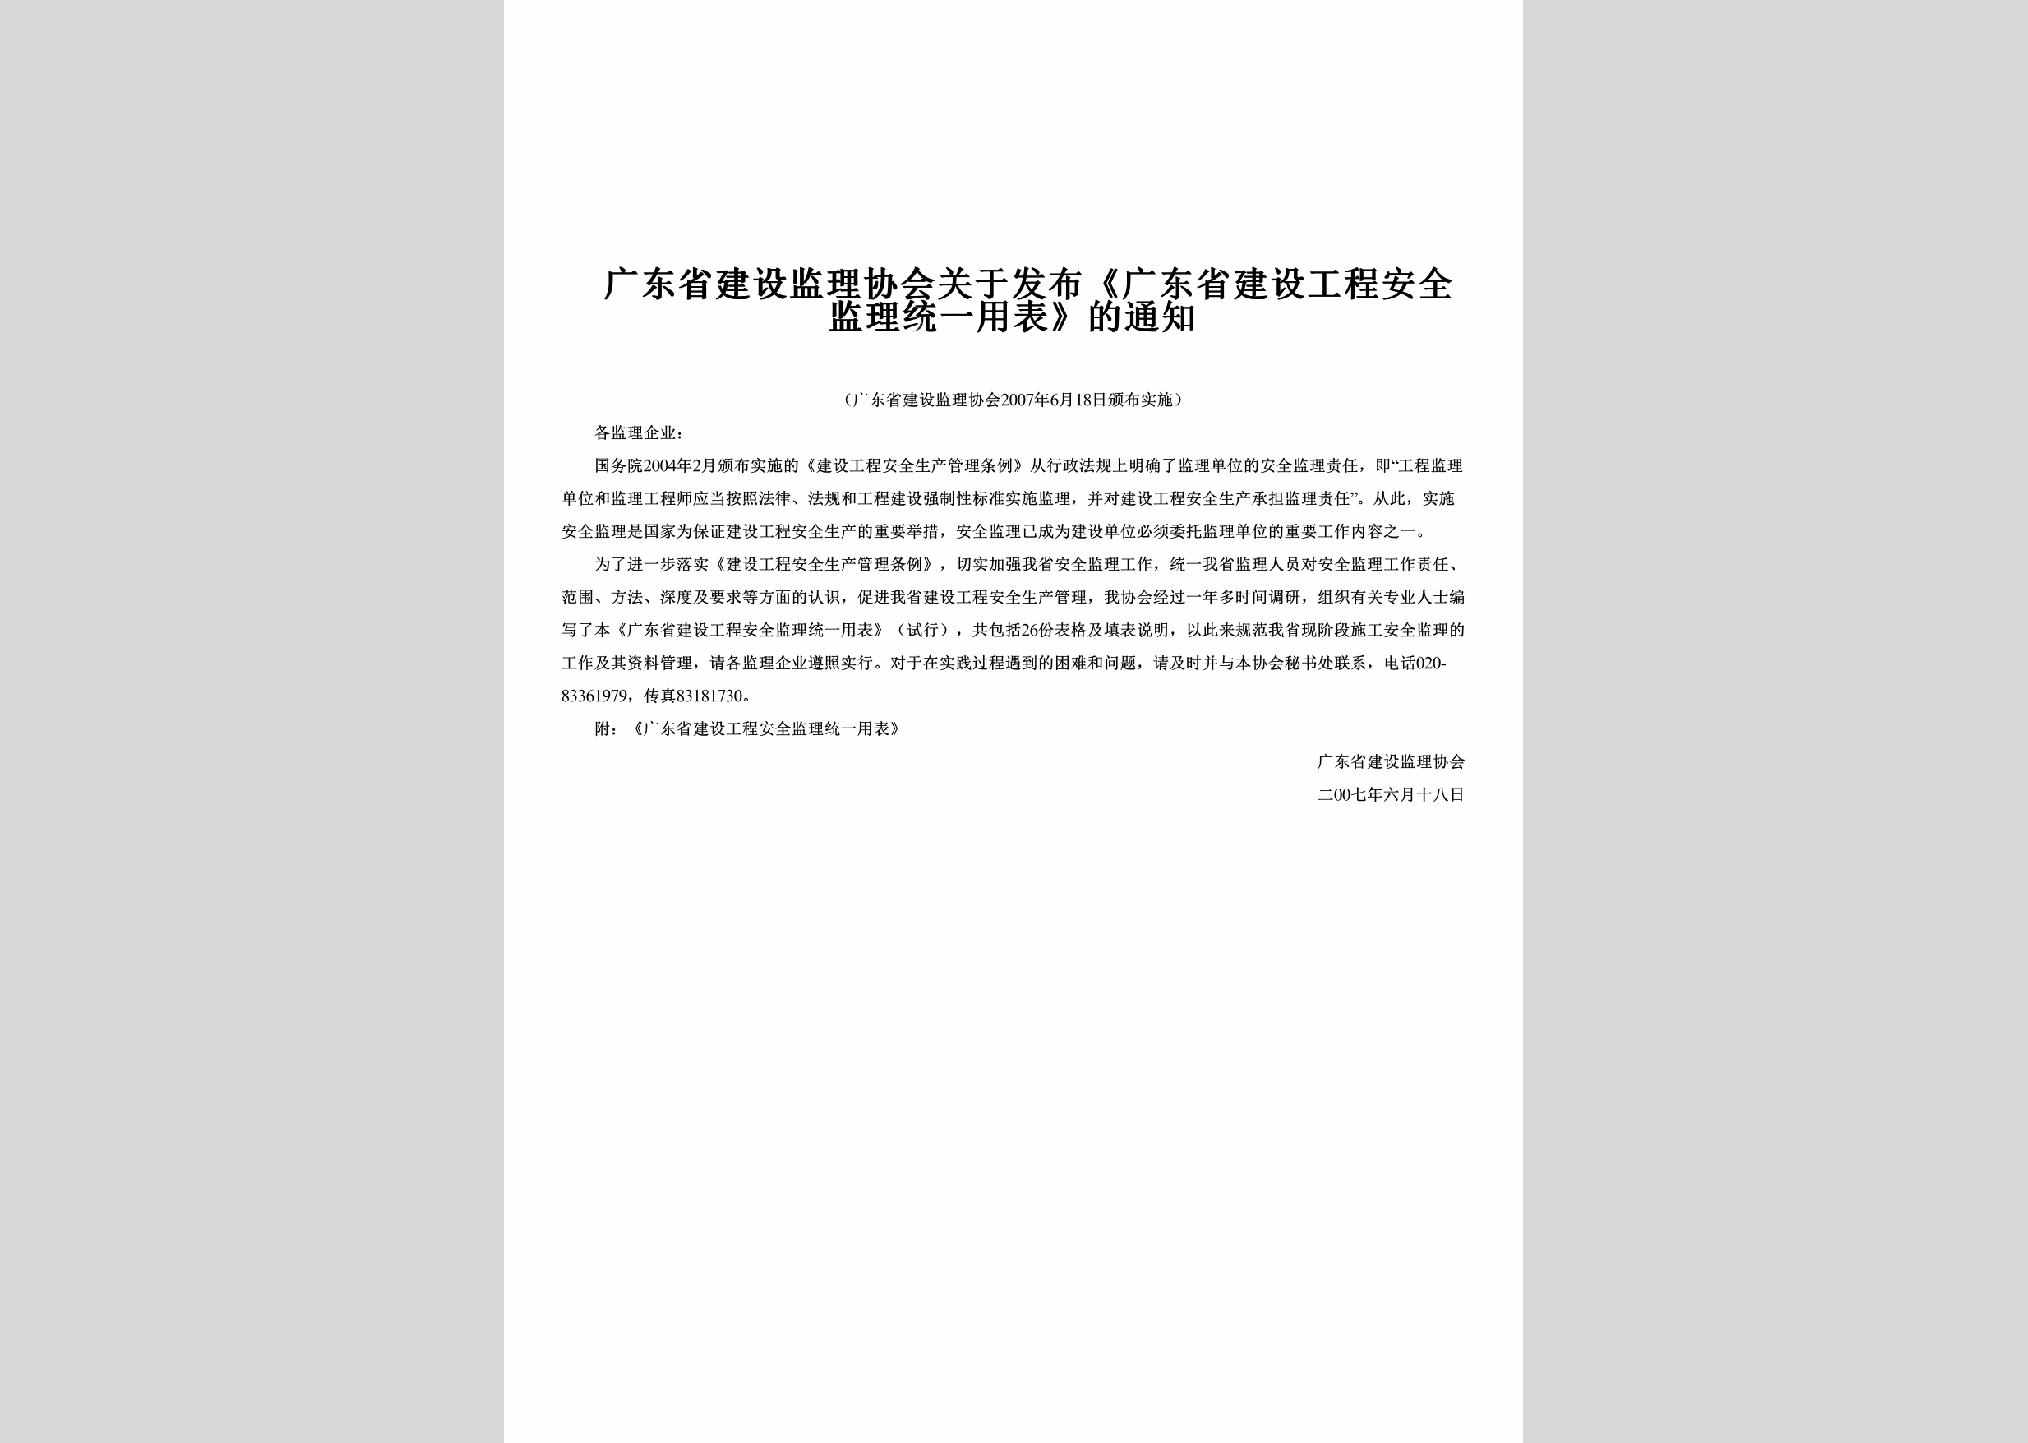 GD-GDSJSGCA-2007：关于发布《广东省建设工程安全监理统一用表》的通知